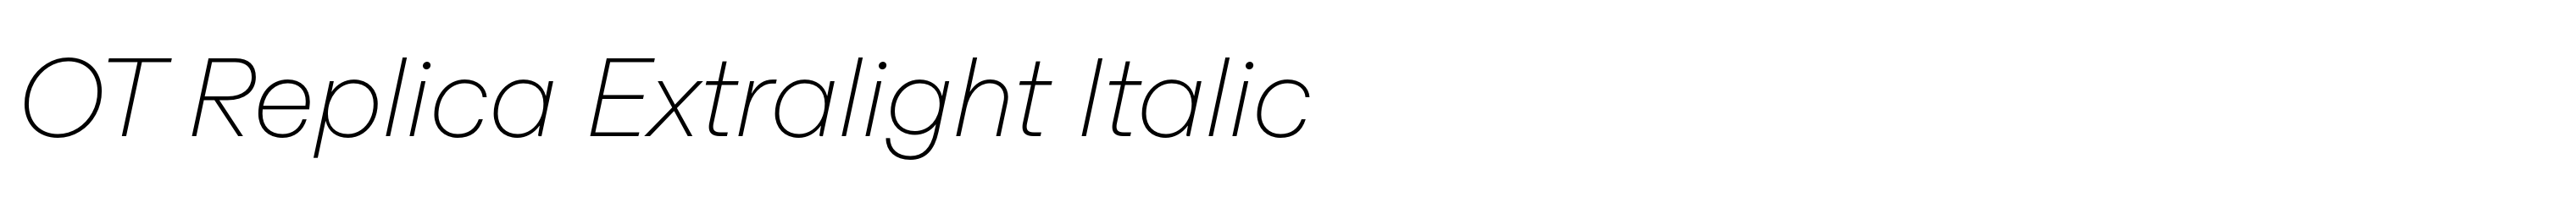 OT Replica Extralight Italic